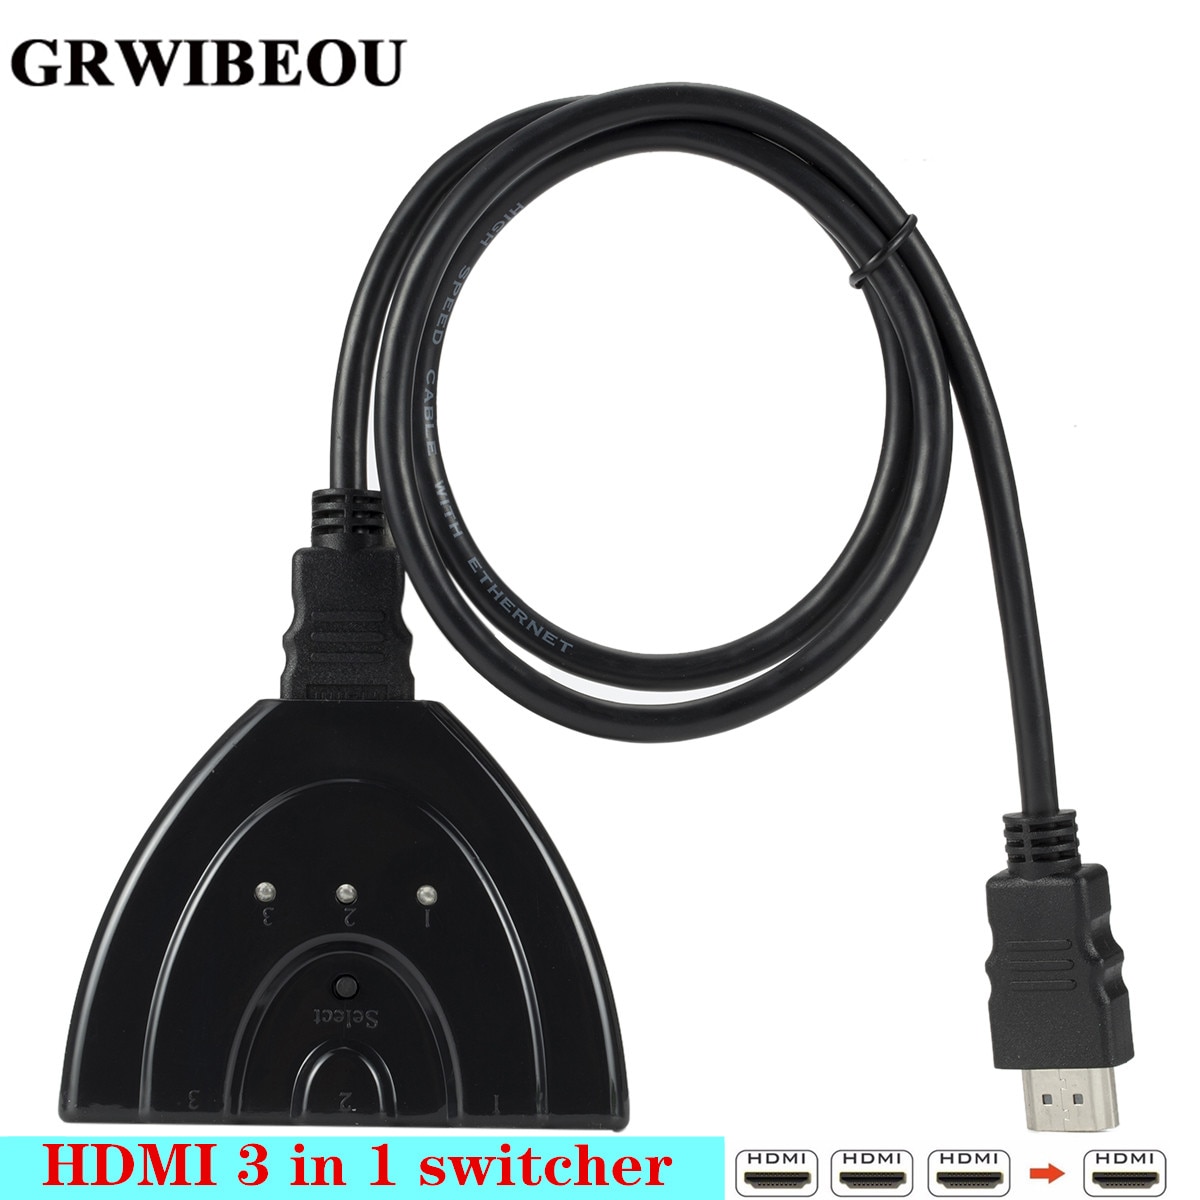 Grwibeou Mini 3 Port HDMI Splitter Adapter Kabel 1080P HDMI Switcher HDMI Switch 3 in 1out Port Switch Hub voor HDTV Xbox PS3 PS4